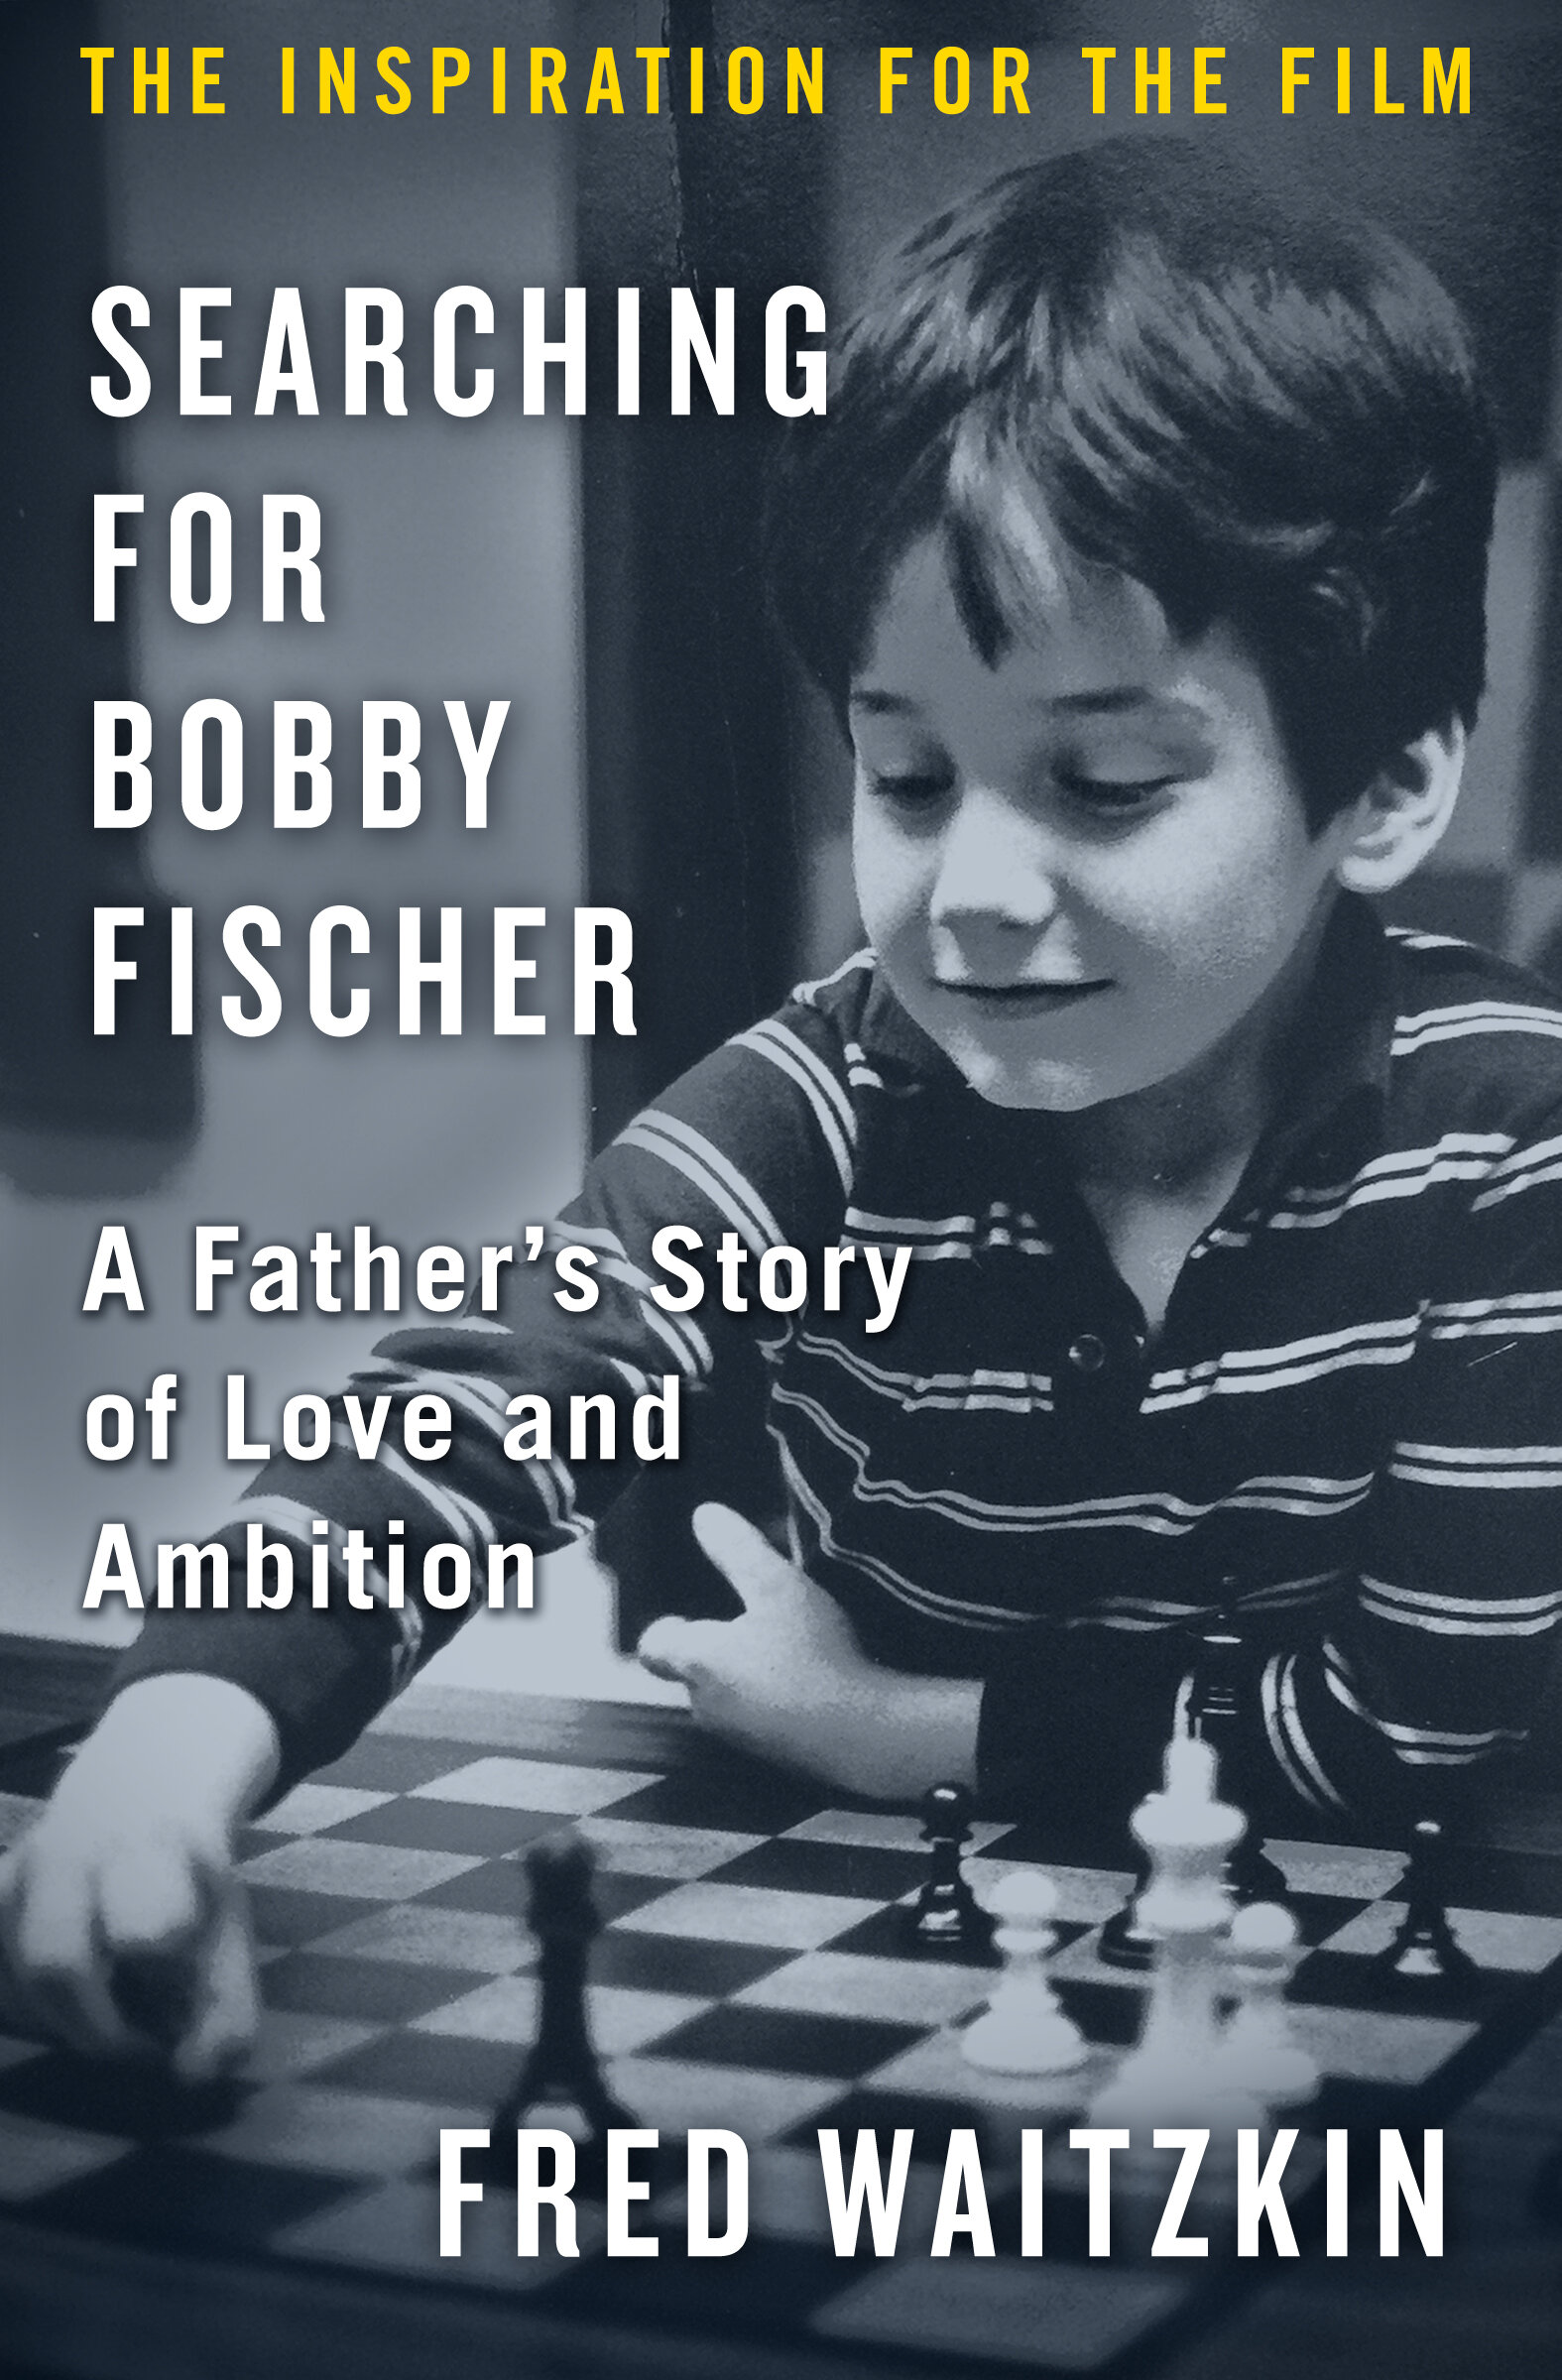 Boris Spassky Bobby Fischer First Edition Signed